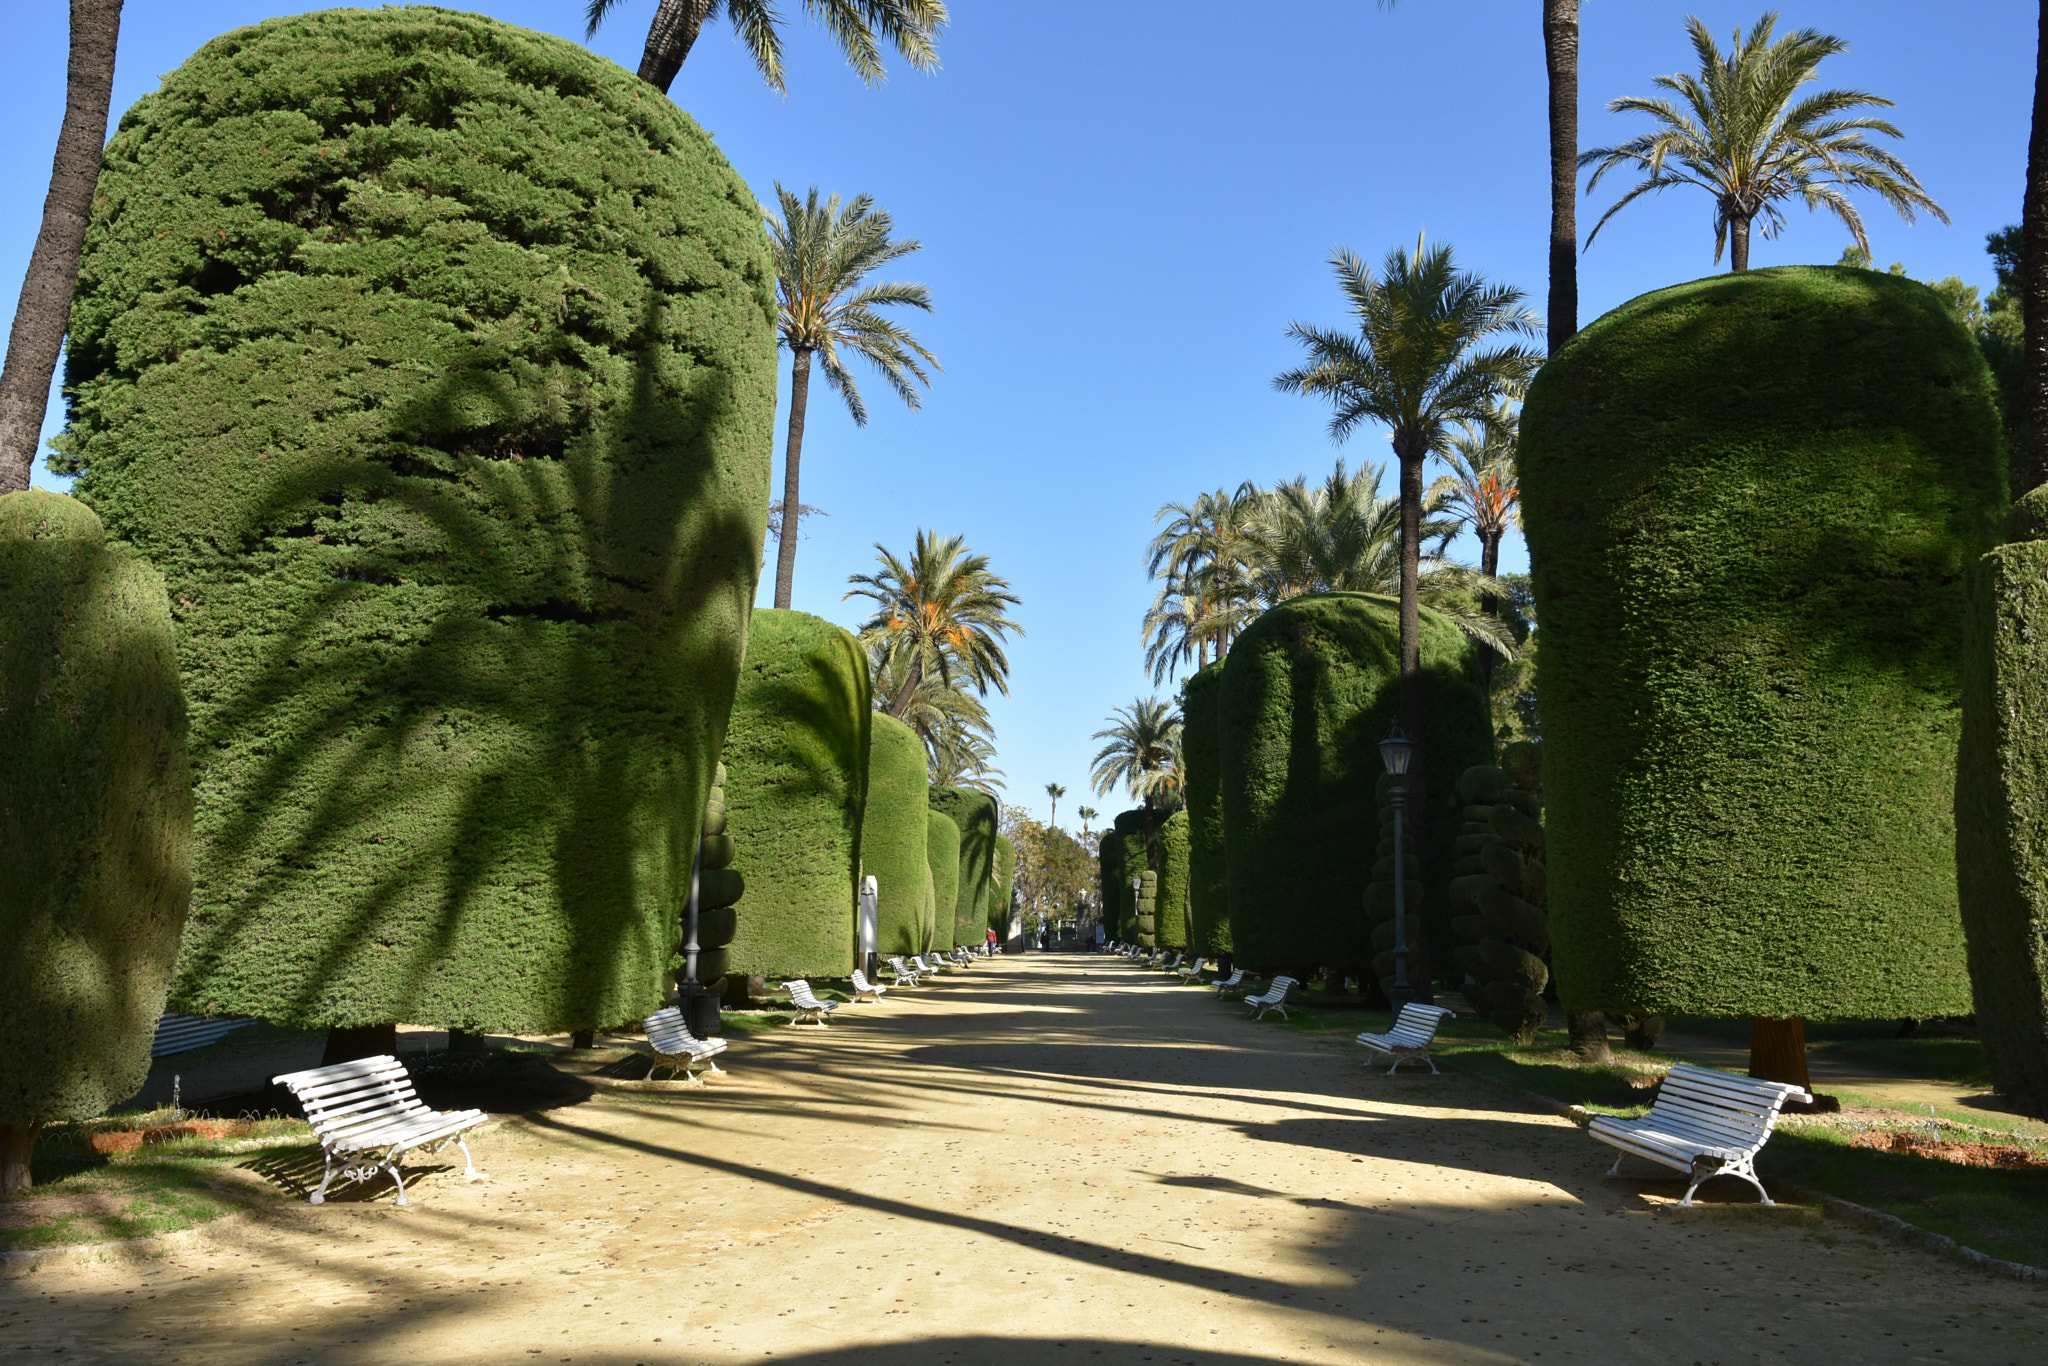 The beautiful botanical garden of Cadiz in Spain